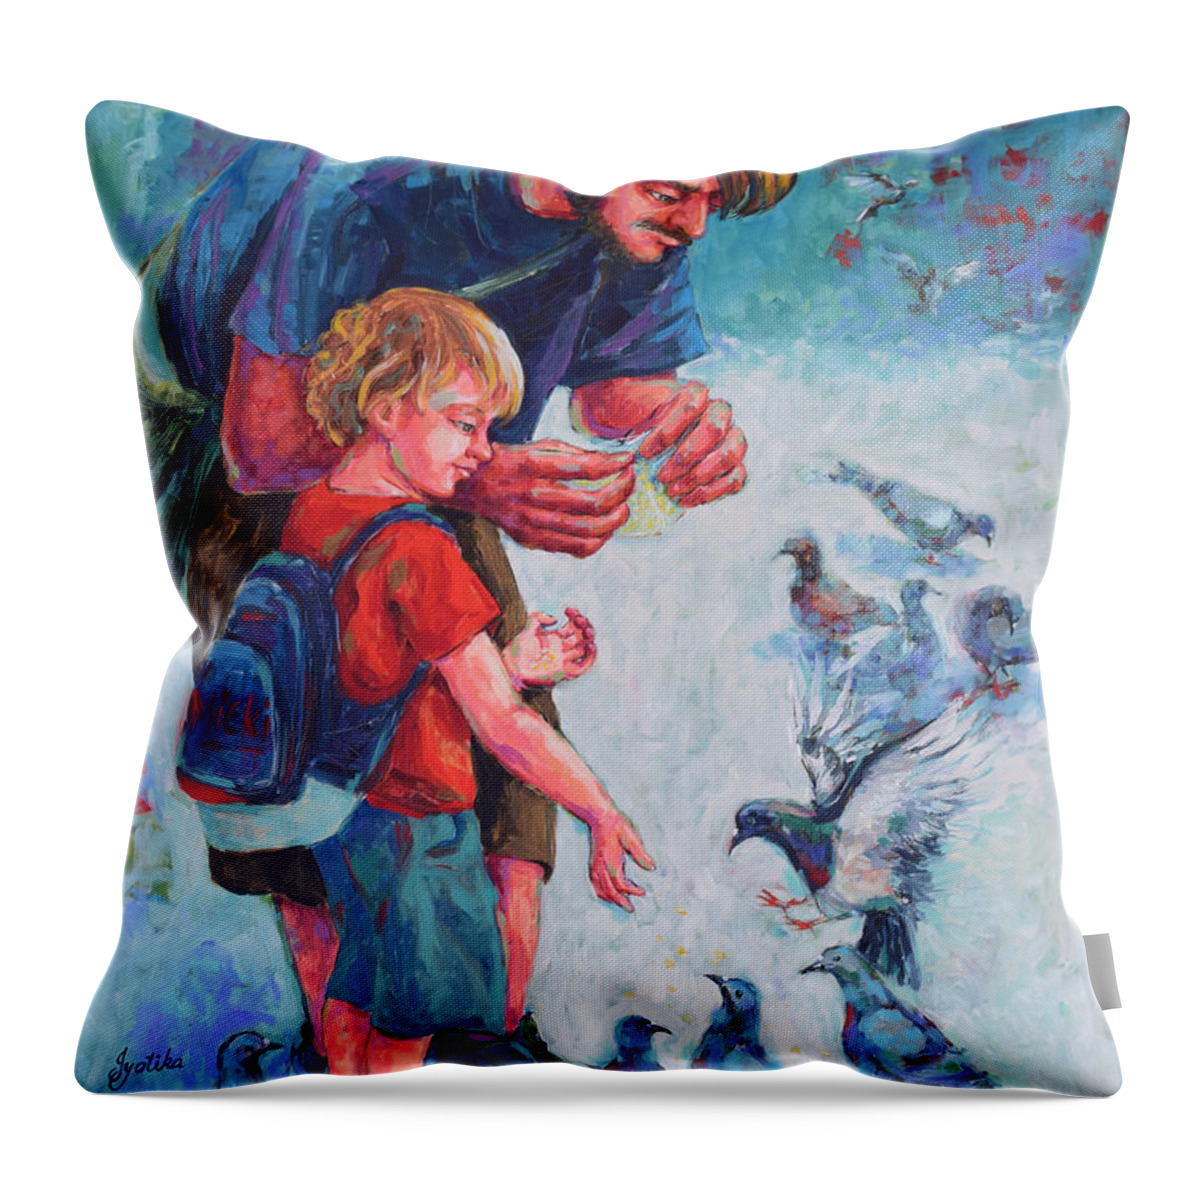 Original Painting Throw Pillow featuring the painting Bonding Time by Jyotika Shroff